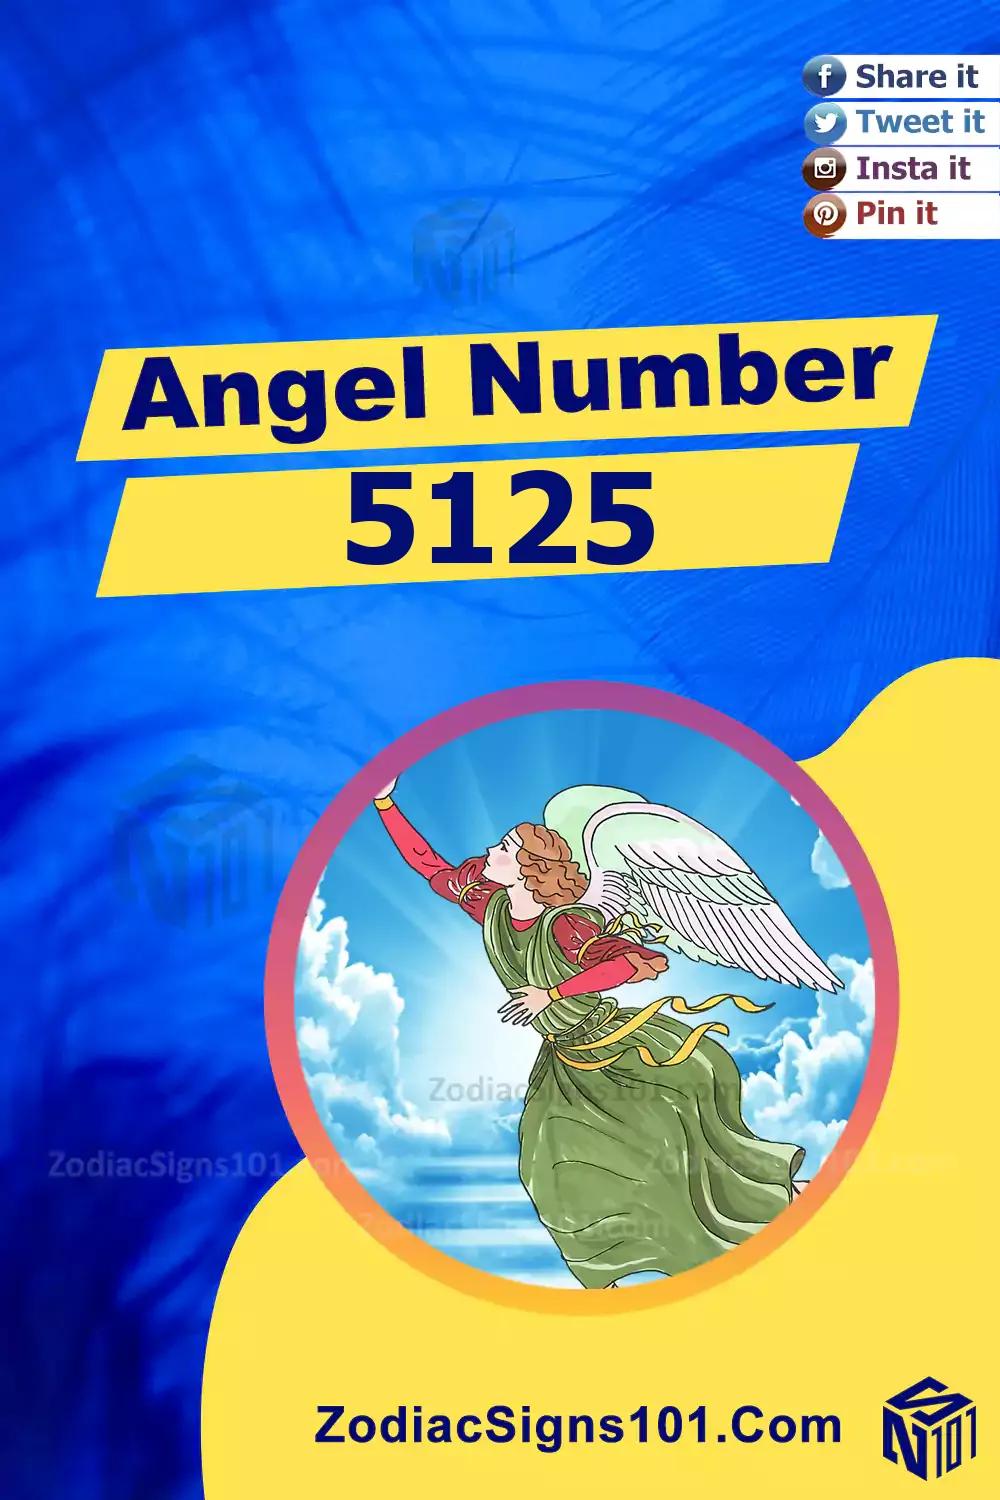 5125-Angel-Number-Meaning.jpg